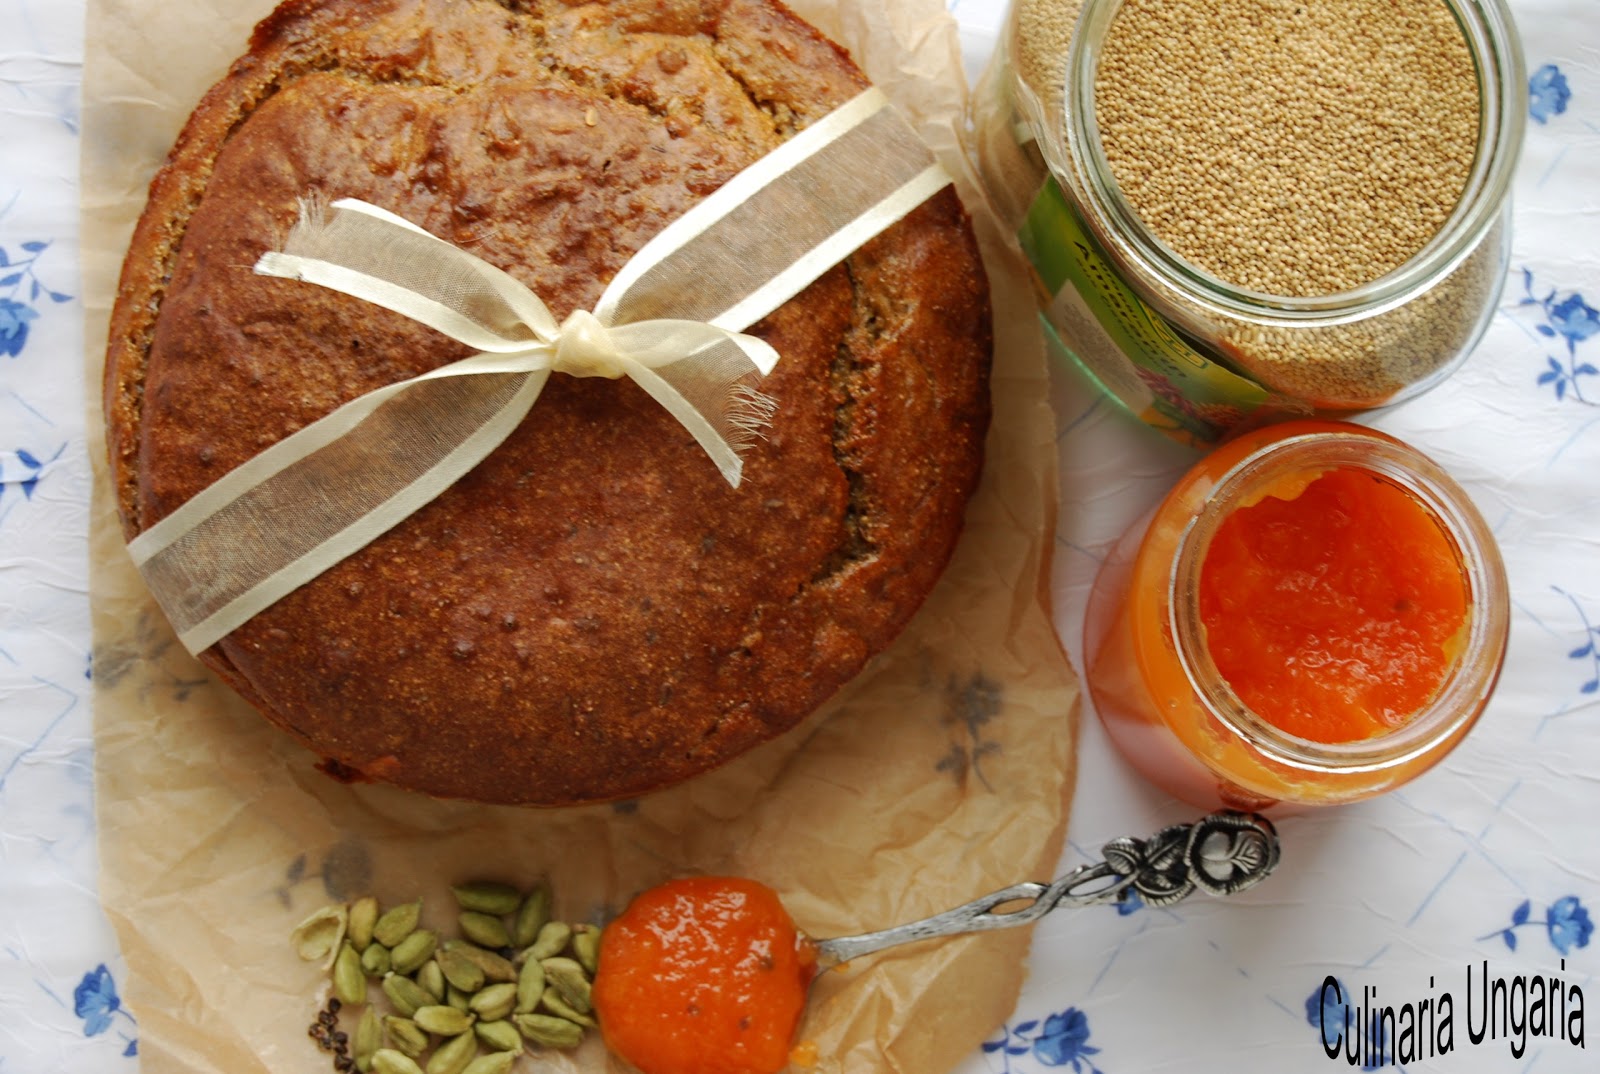 Culinaria Ungaria: Amaranth-Brot mit Leinsamen